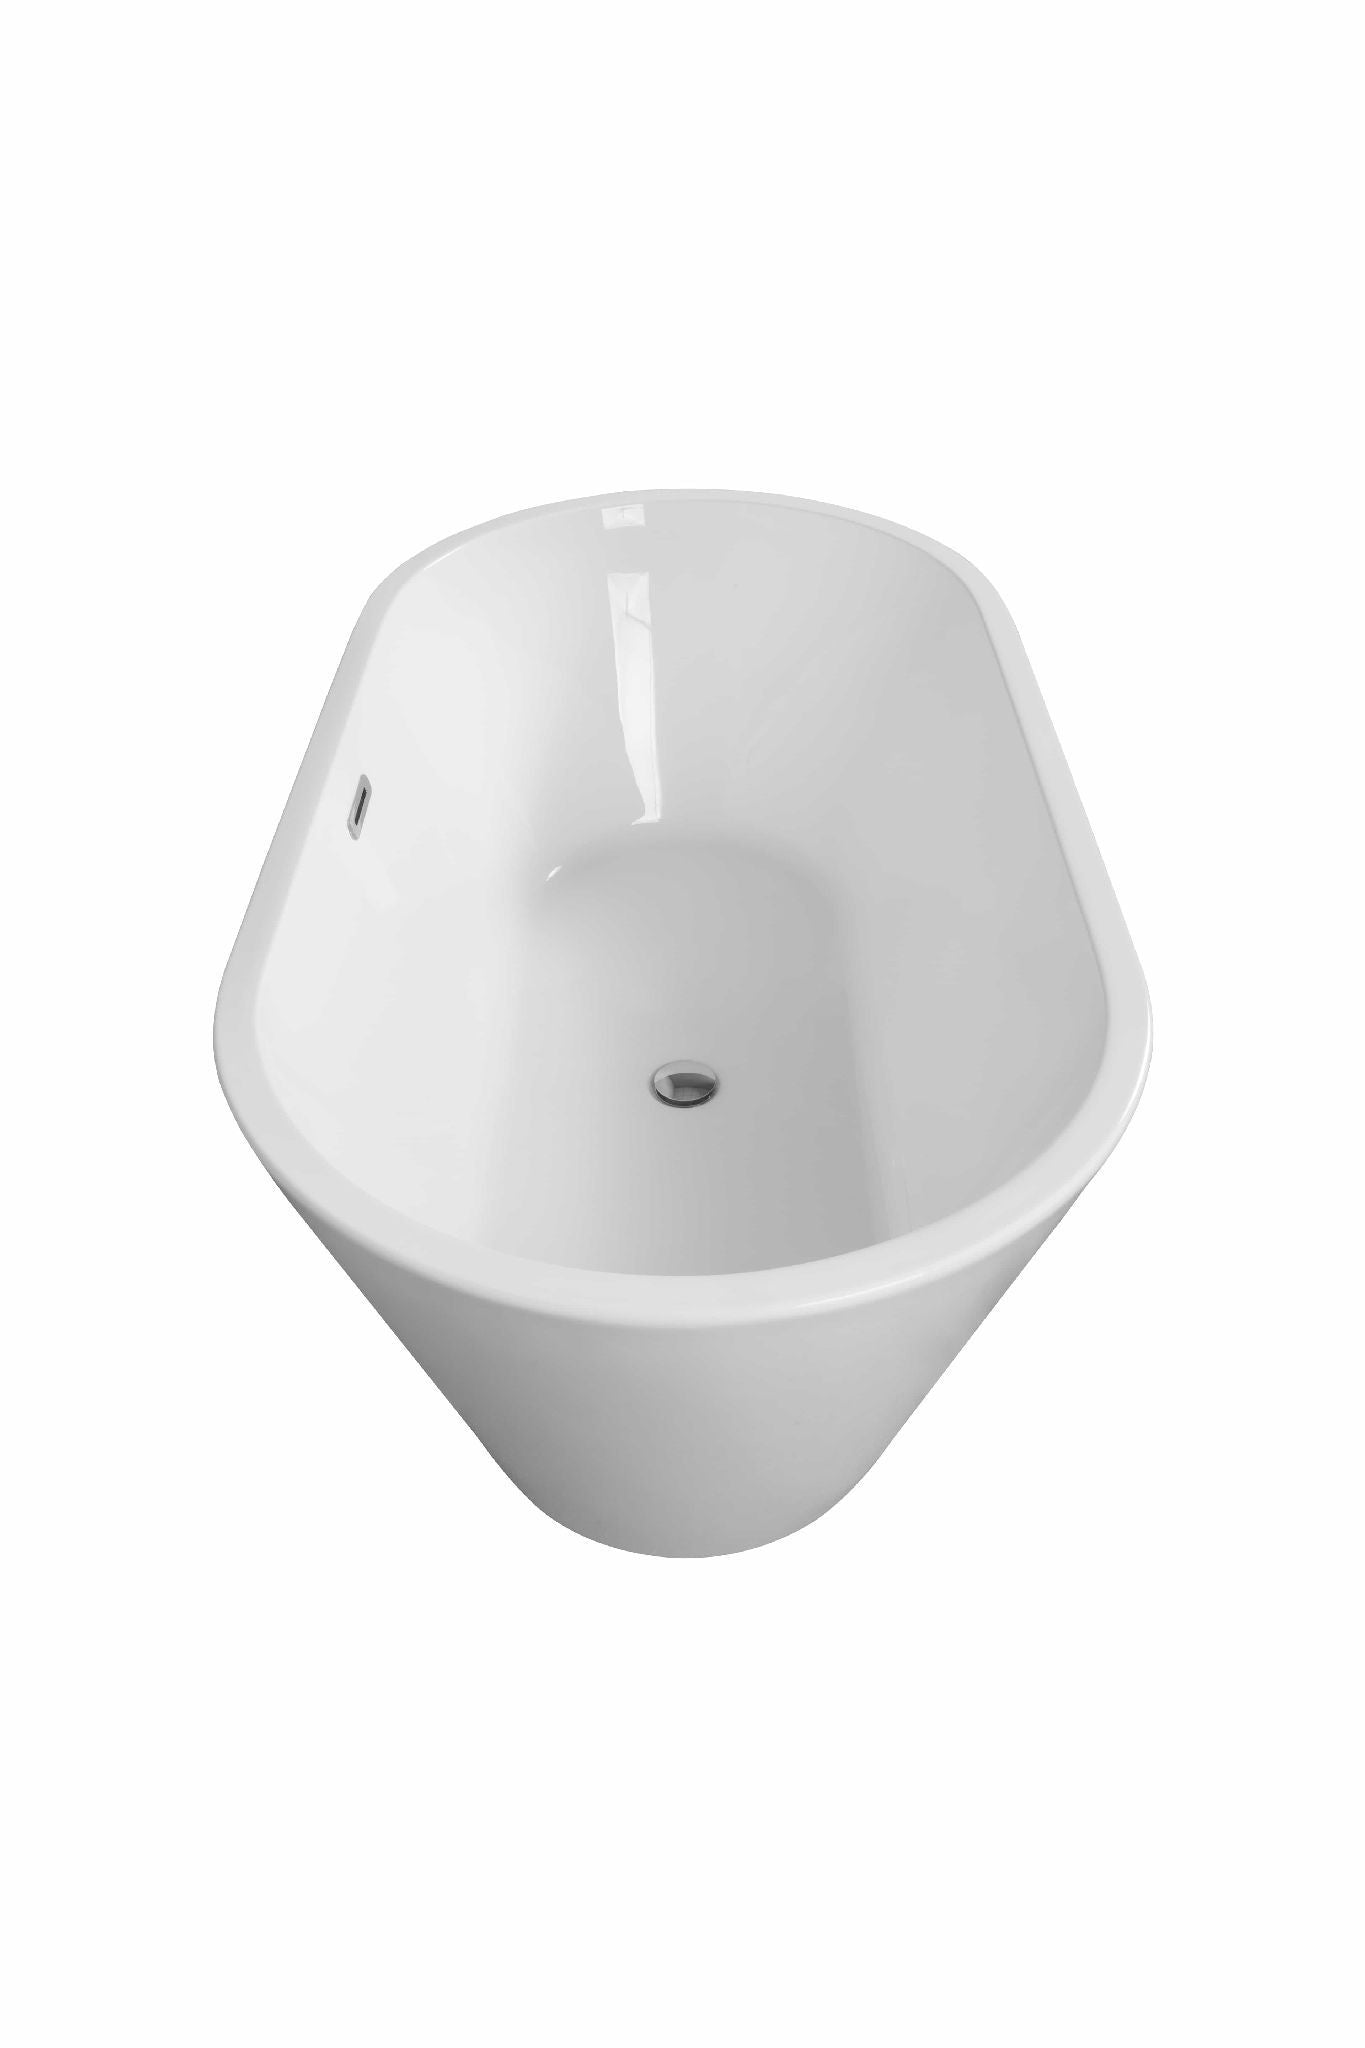 SkySea Bath Tub 67 White Acrylic Free Standing Soaker, Center Drain And Overflow